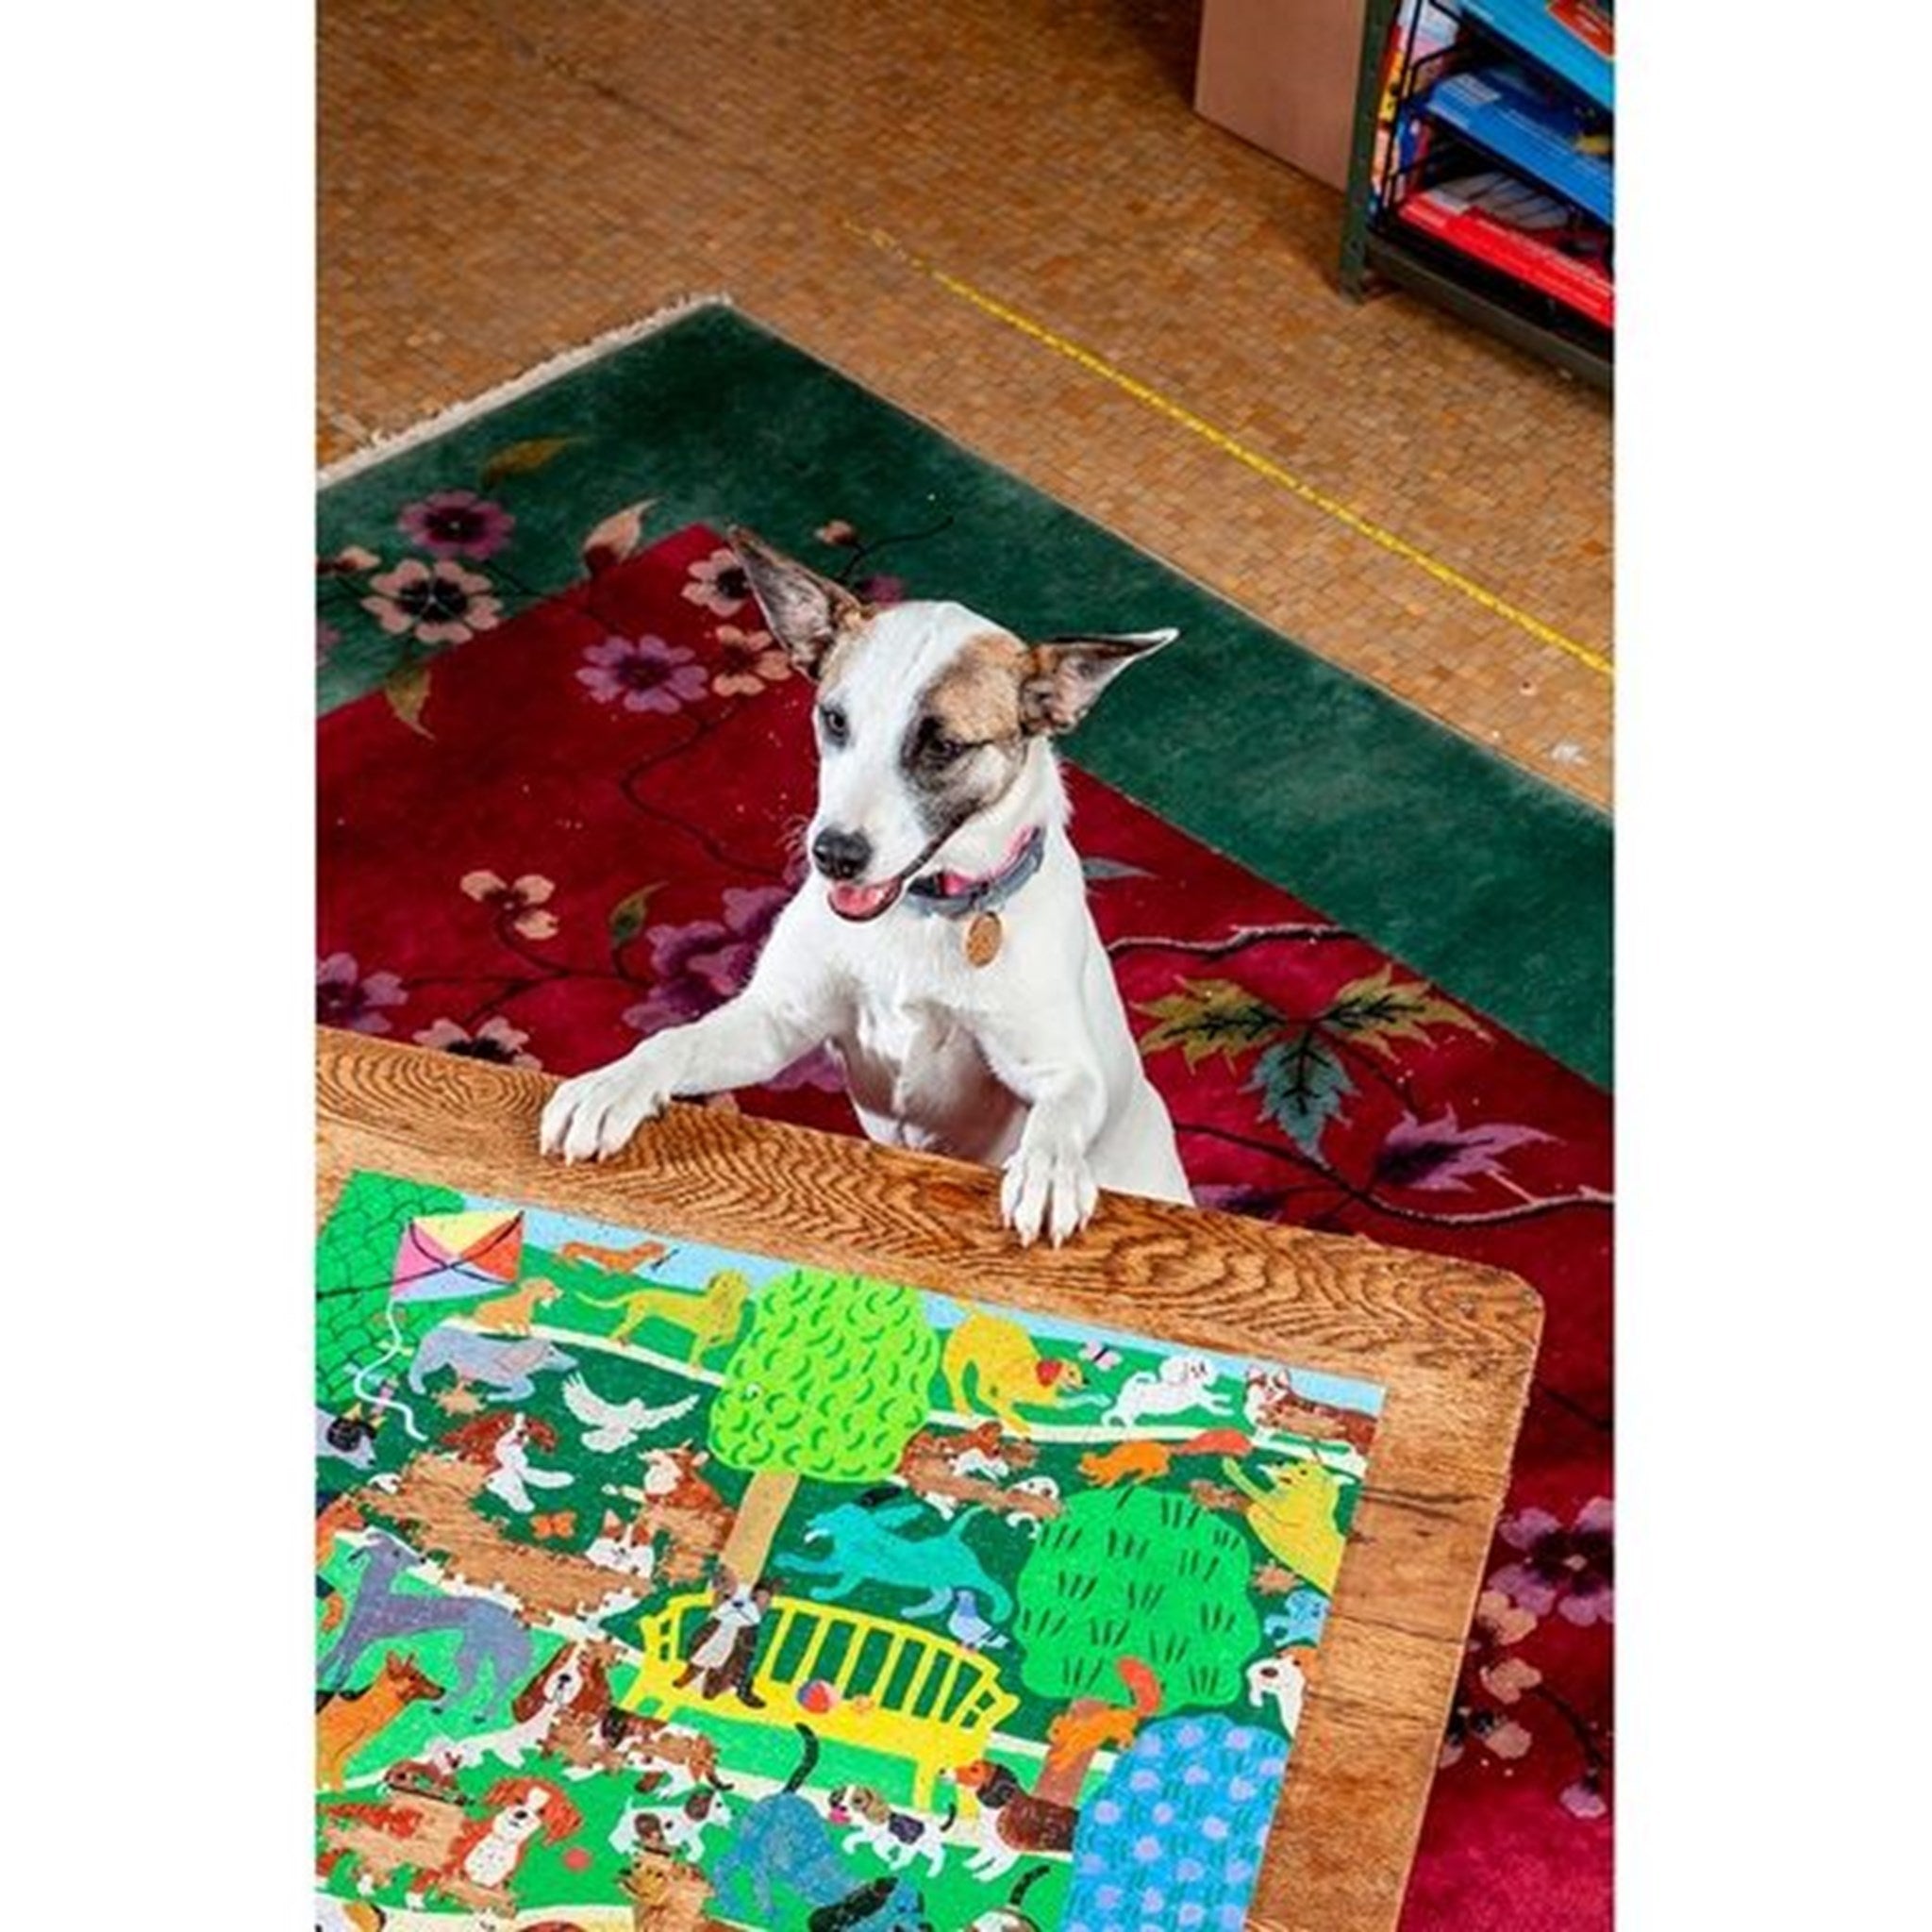 Eeboo Puzzle 1000 Pieces - Dogs in the Park 2